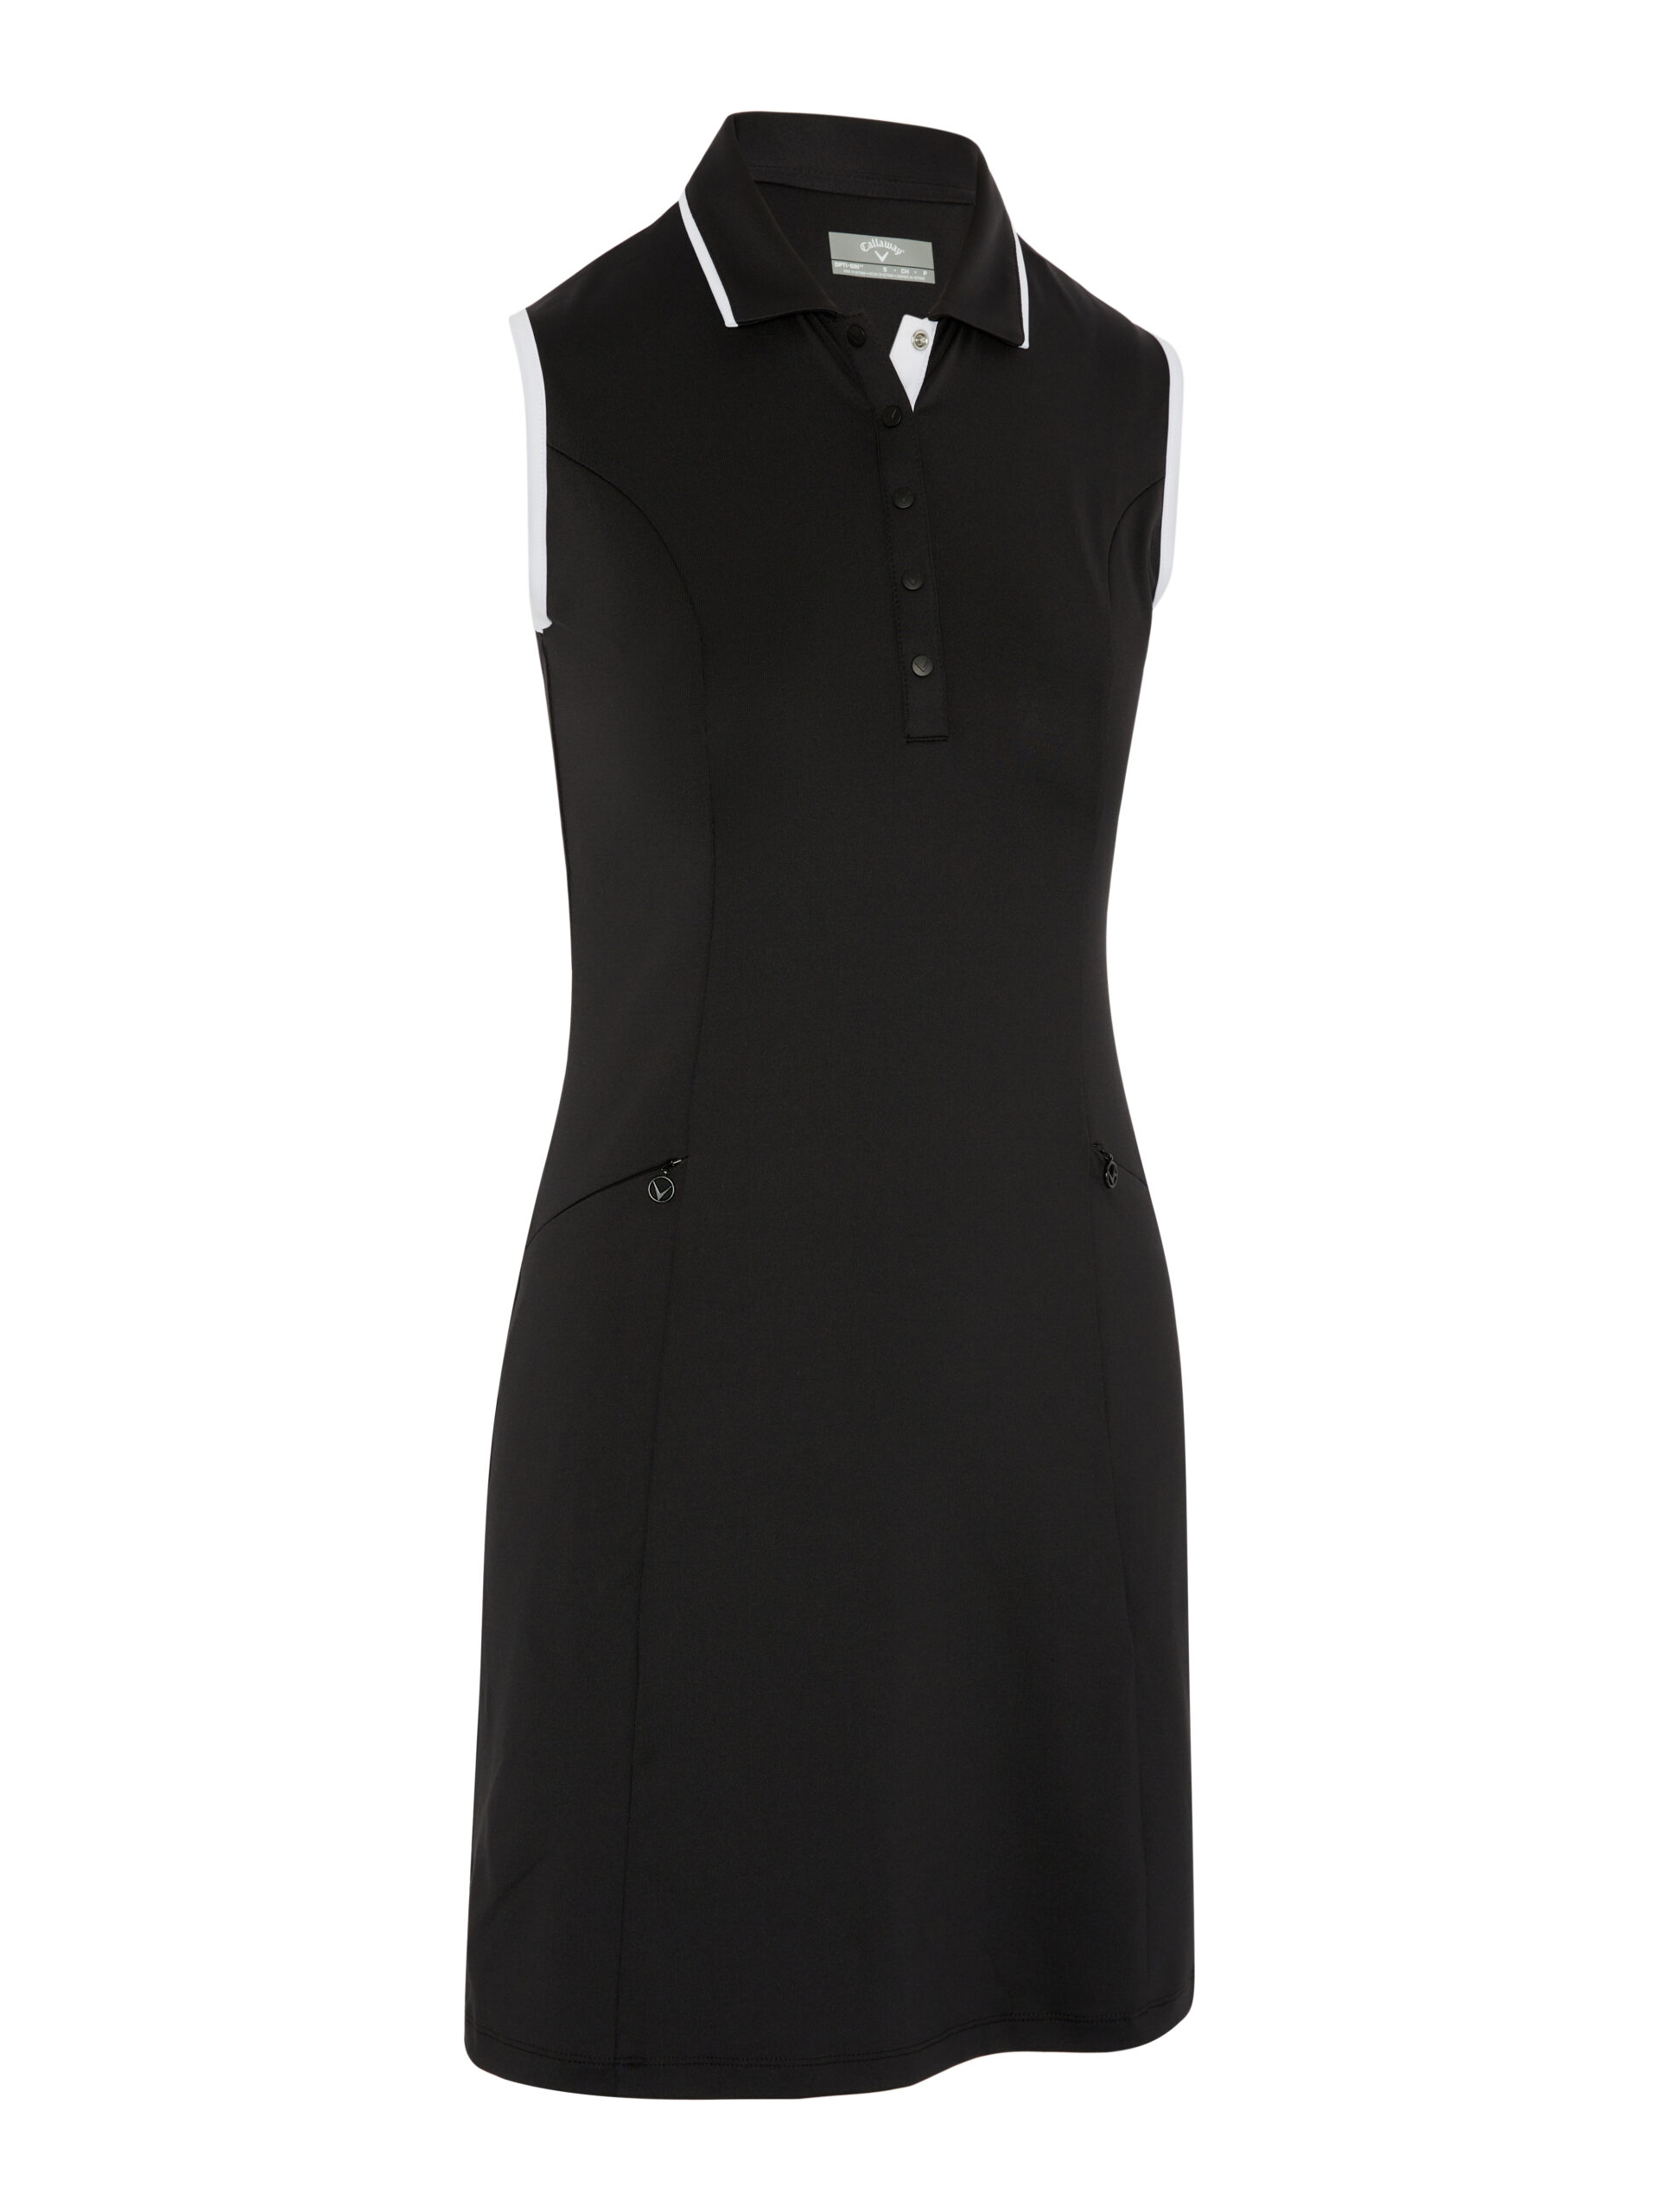 Callaway dámské golfové šaty, černé, vel. XL